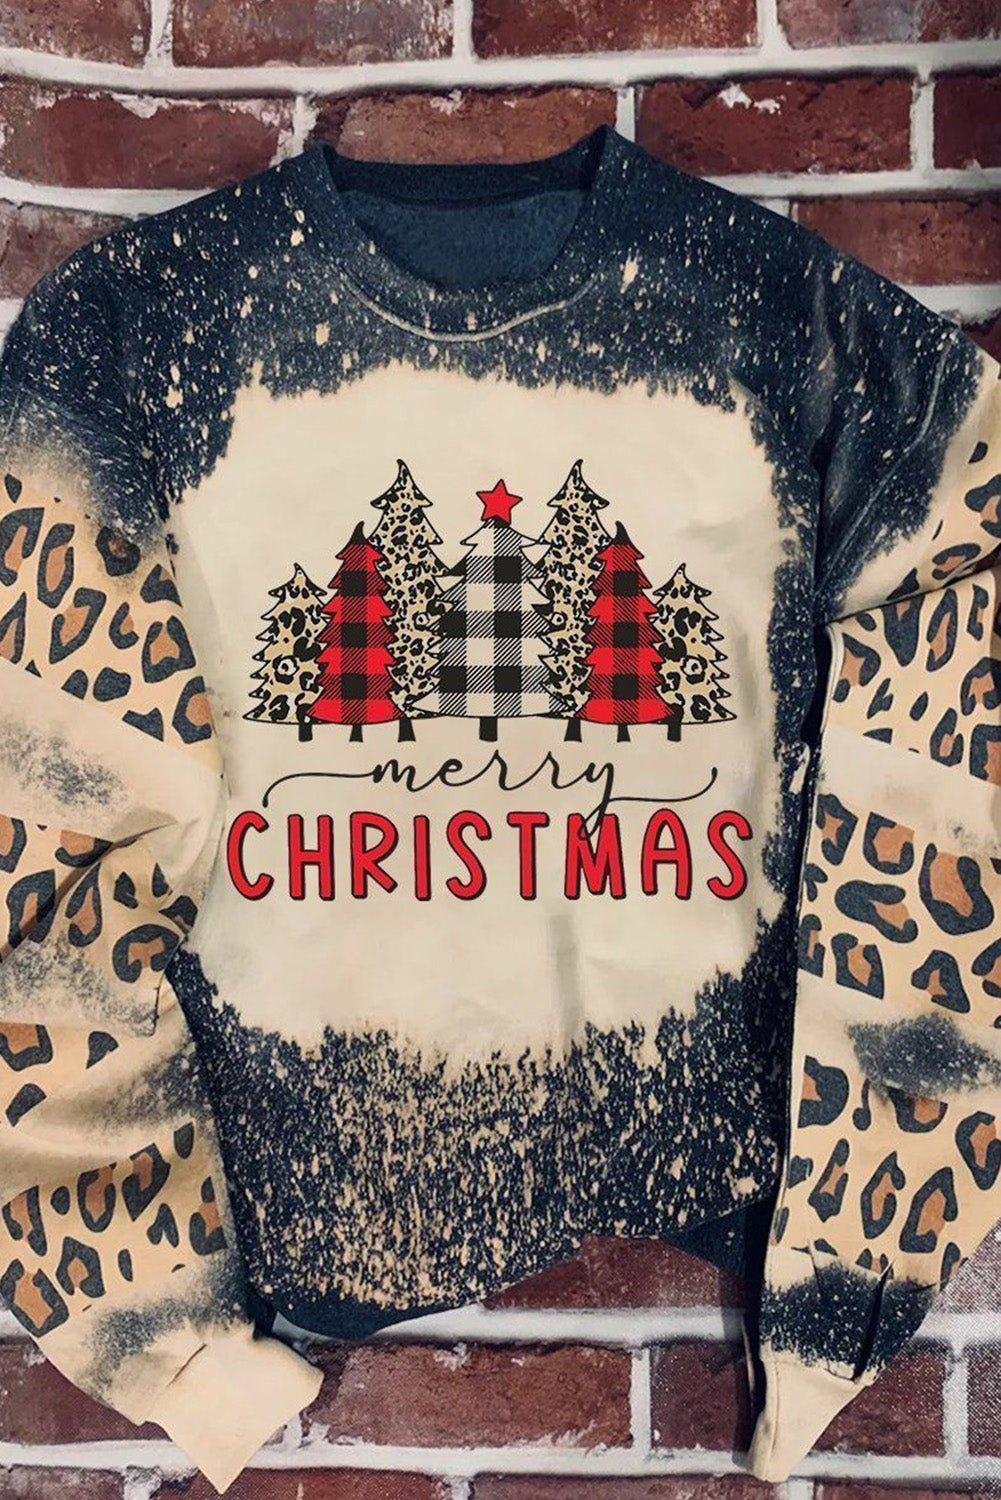 LC25313520-2-S, LC25313520-2-M, LC25313520-2-L, LC25313520-2-XL, LC25313520-2-2XL, Black Merry Christmas Sweatshirt for Women Leopard Pullover Sweatshirt